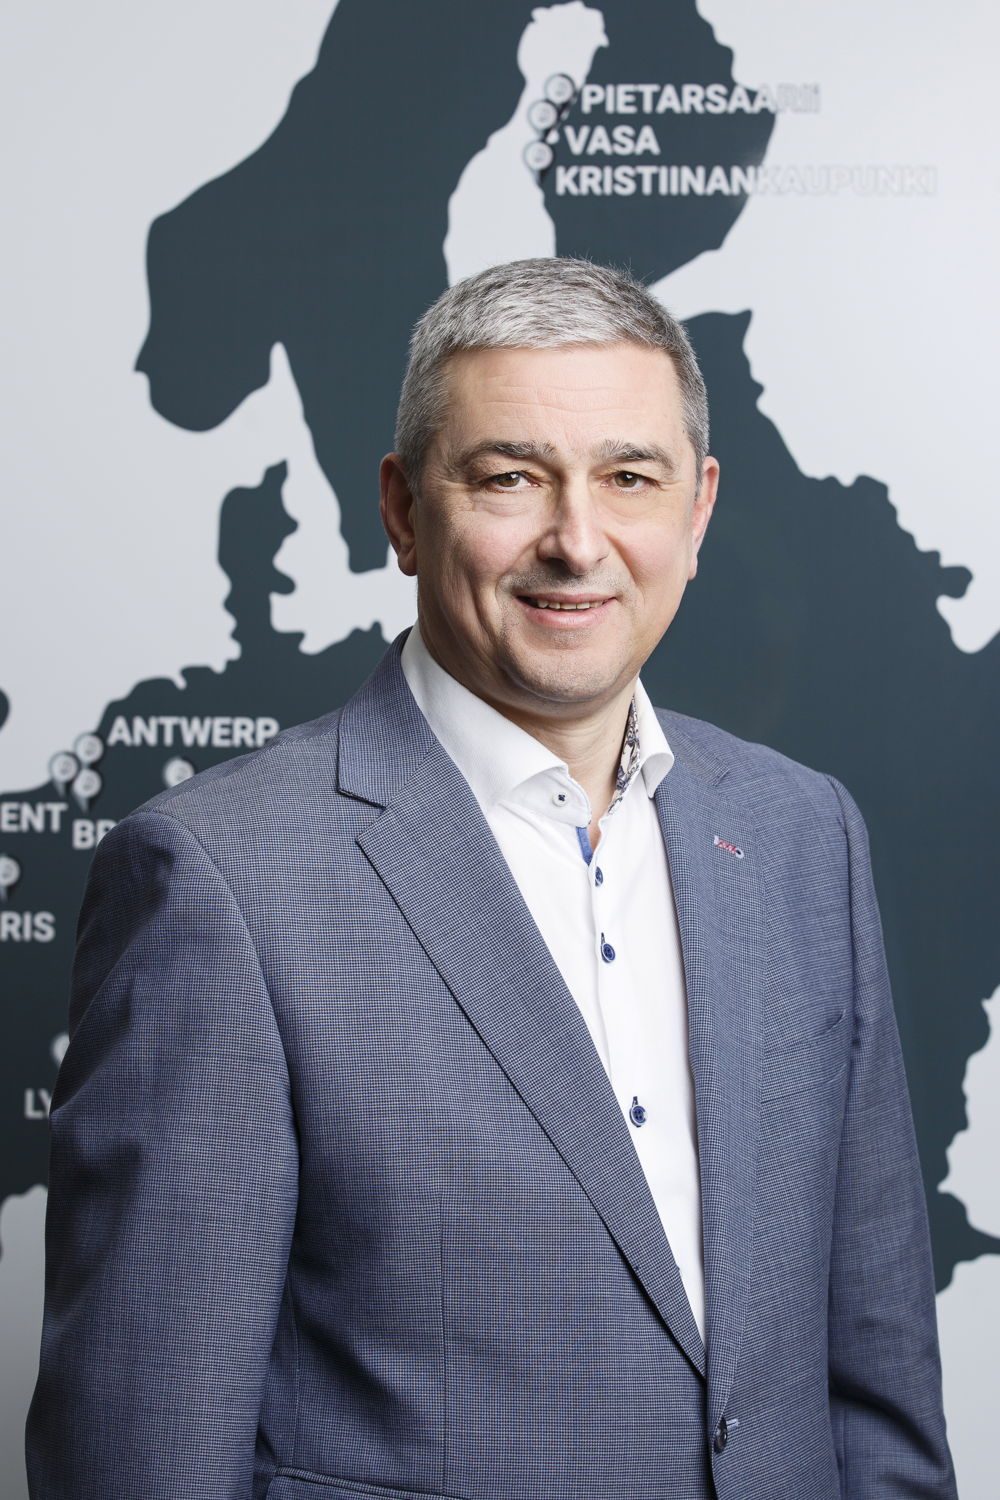 Michel d'Alessandro, CEO van PPP